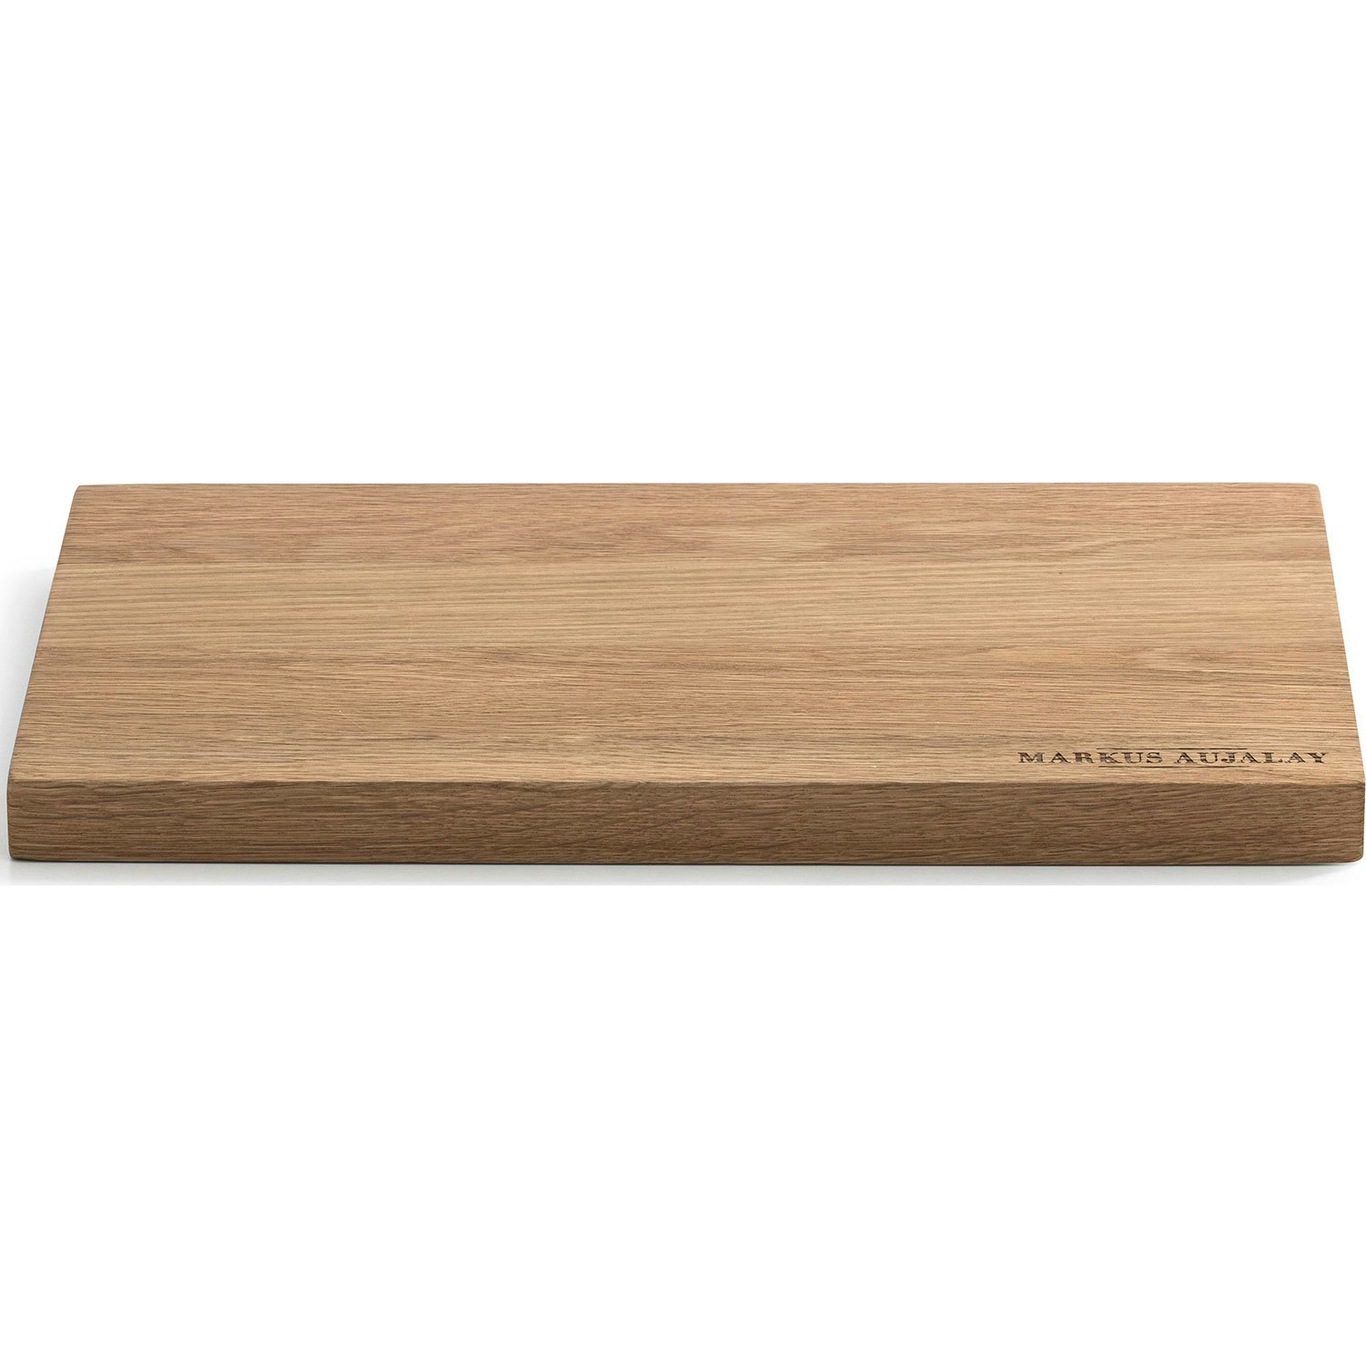 https://royaldesign.com/image/2/markus-aujalay-markus-cutting-board-oak-4?w=800&quality=80